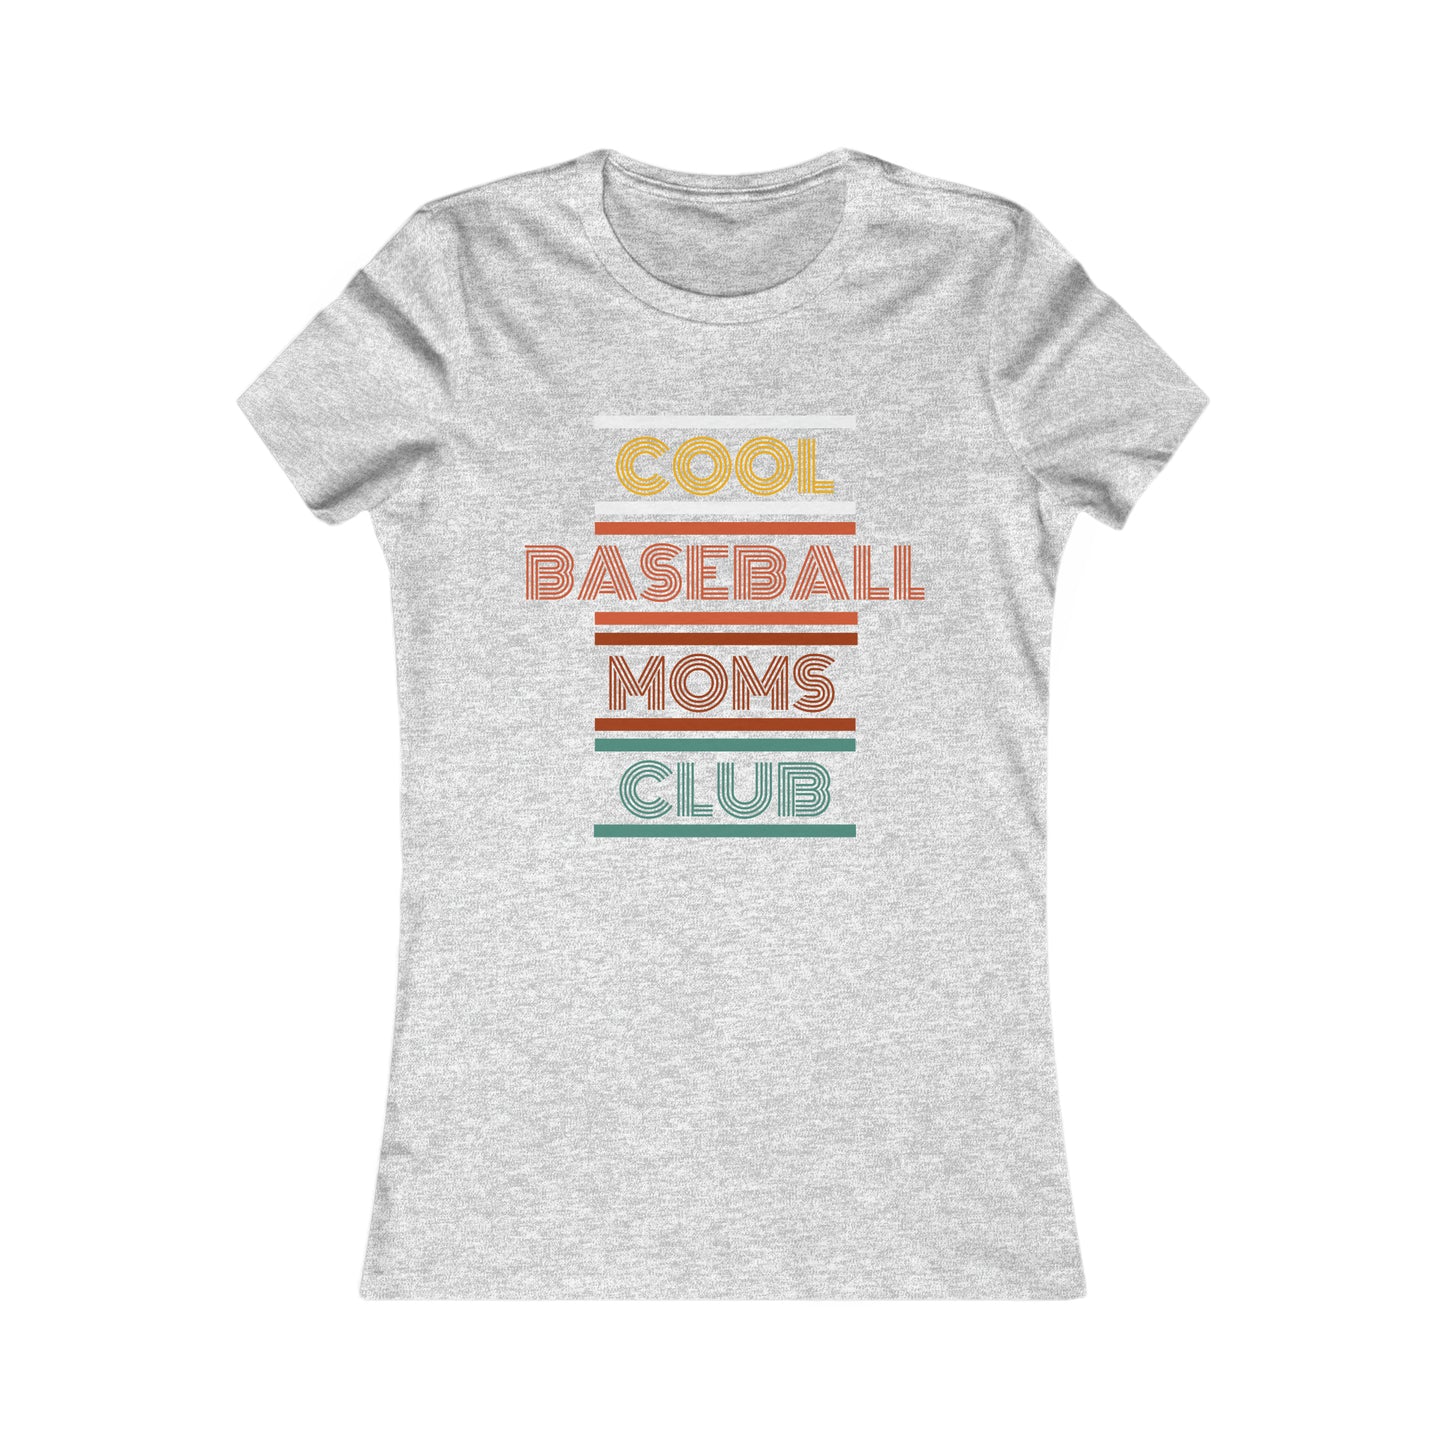 Cool Baseball Moms Club - Women's Favorite Tee